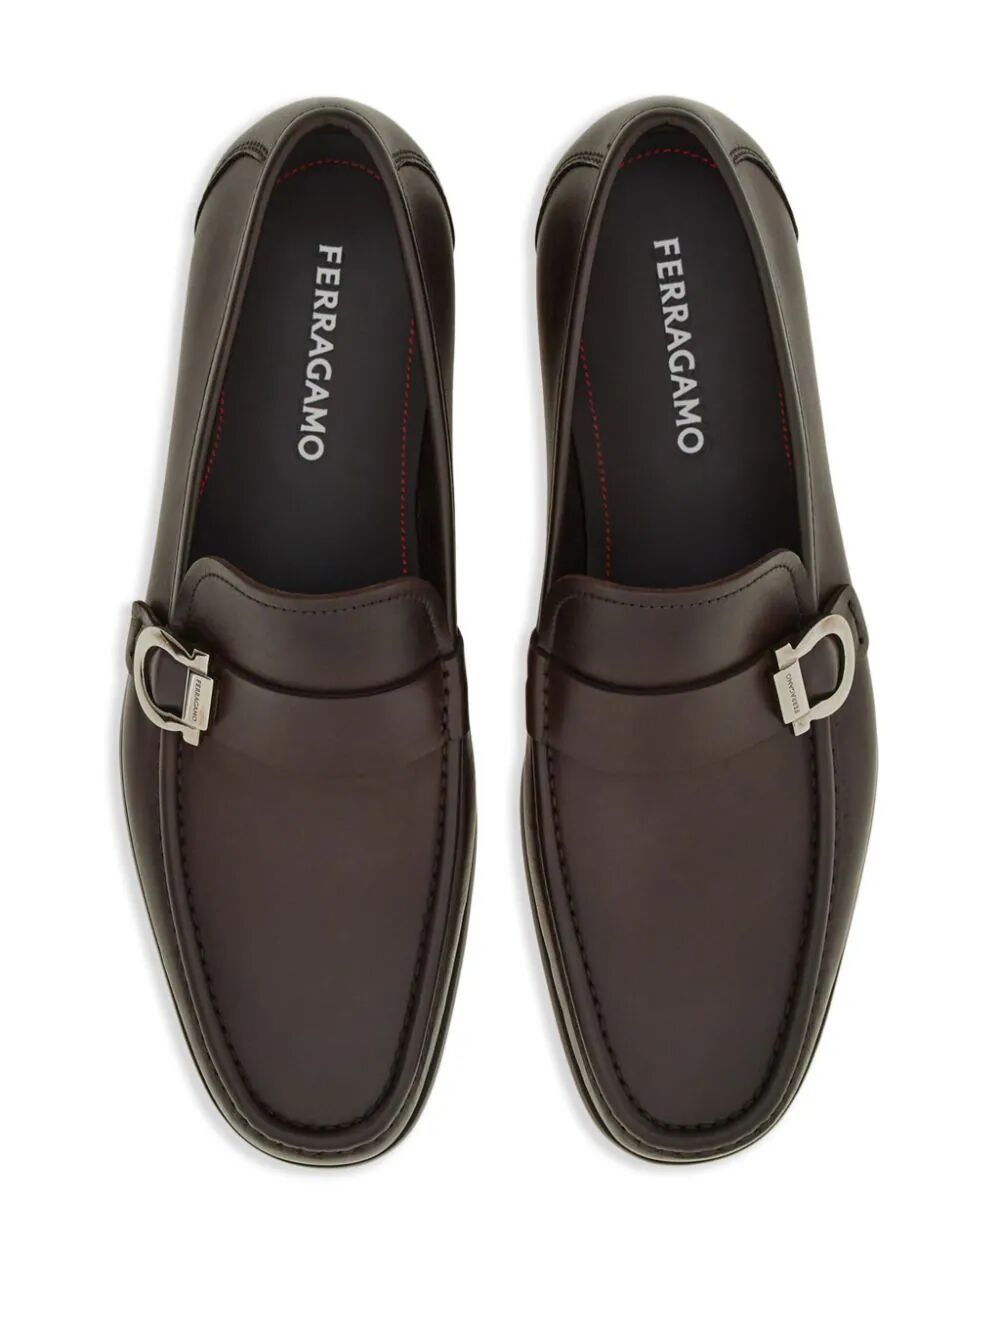 FERRAGAMO Reversible Gancini Hook Loafers for Men - Brown Calf Leather Moccasins